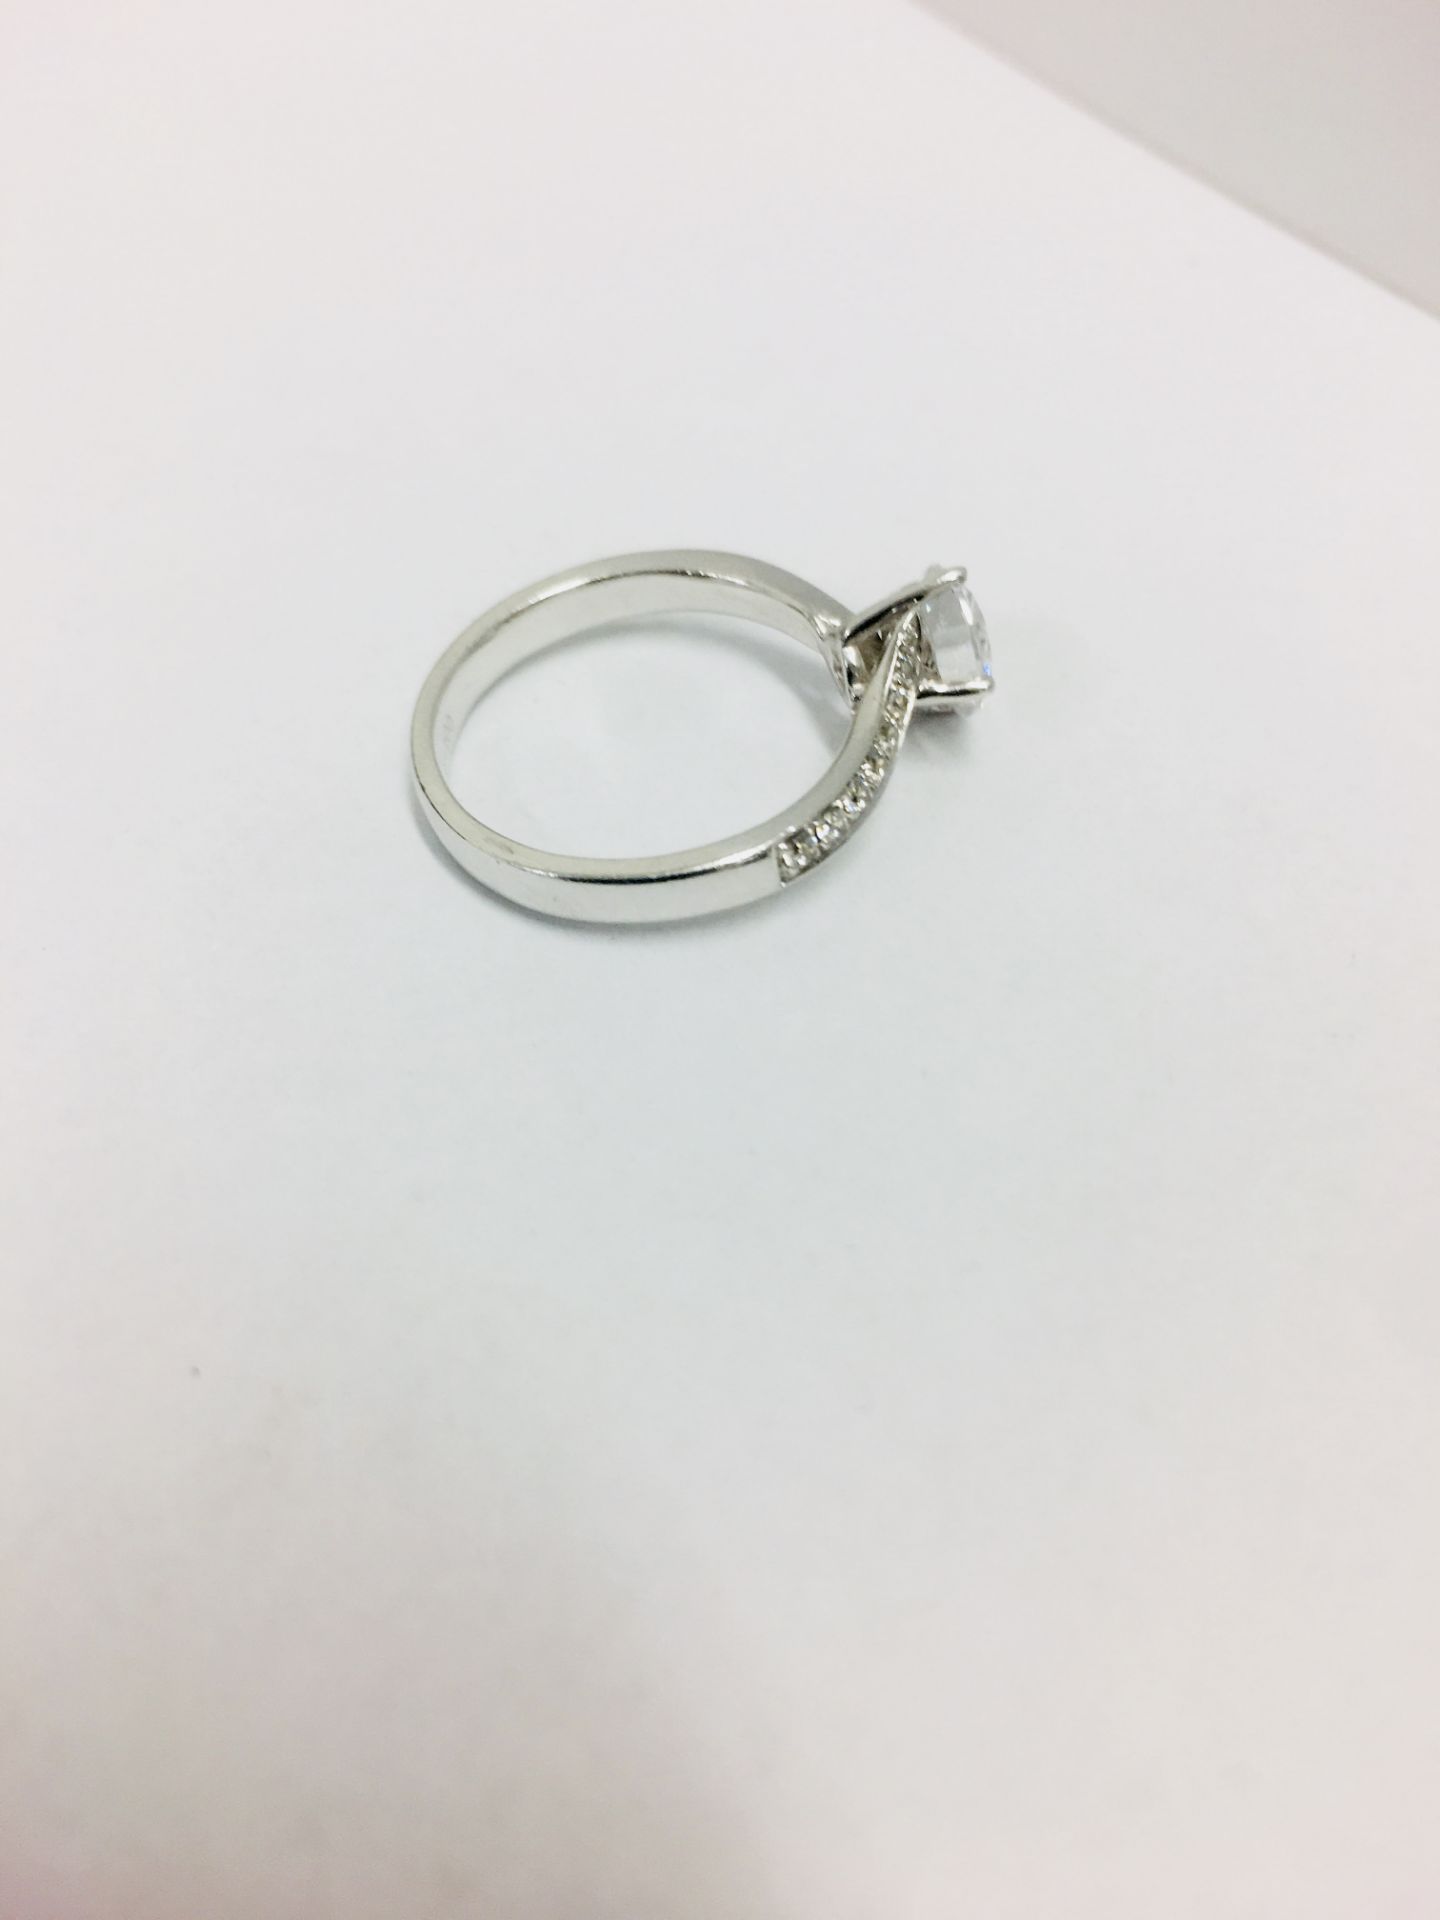 Platinum twist diamond solitaire ring,0.50ct brilliant cut diamond,D colour vs clarity,,3.5 gms - Image 4 of 7